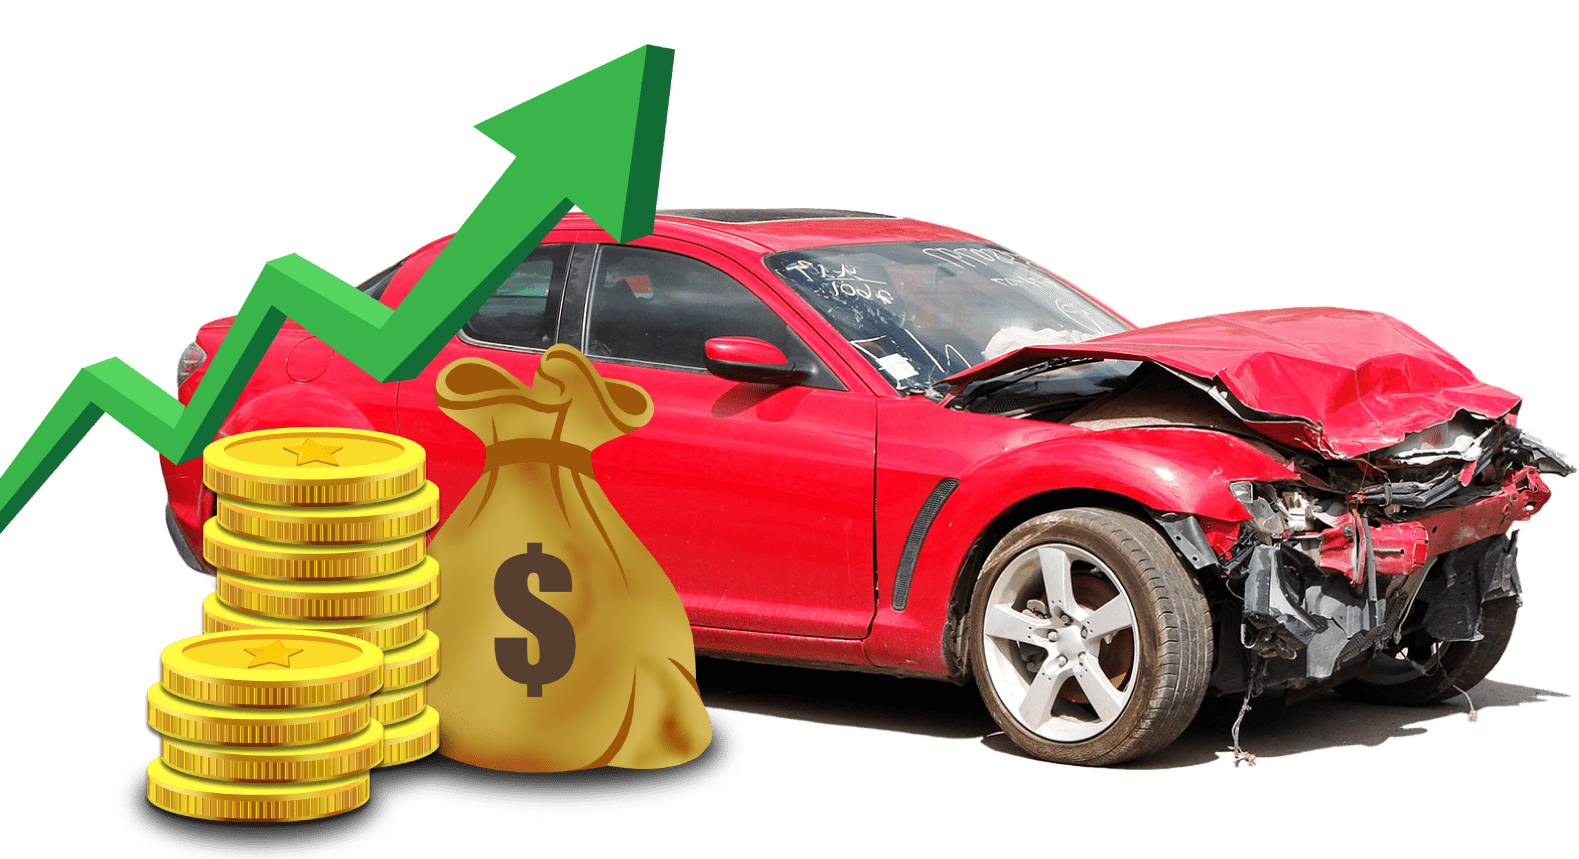  Cash for scrap cars Samford Village 